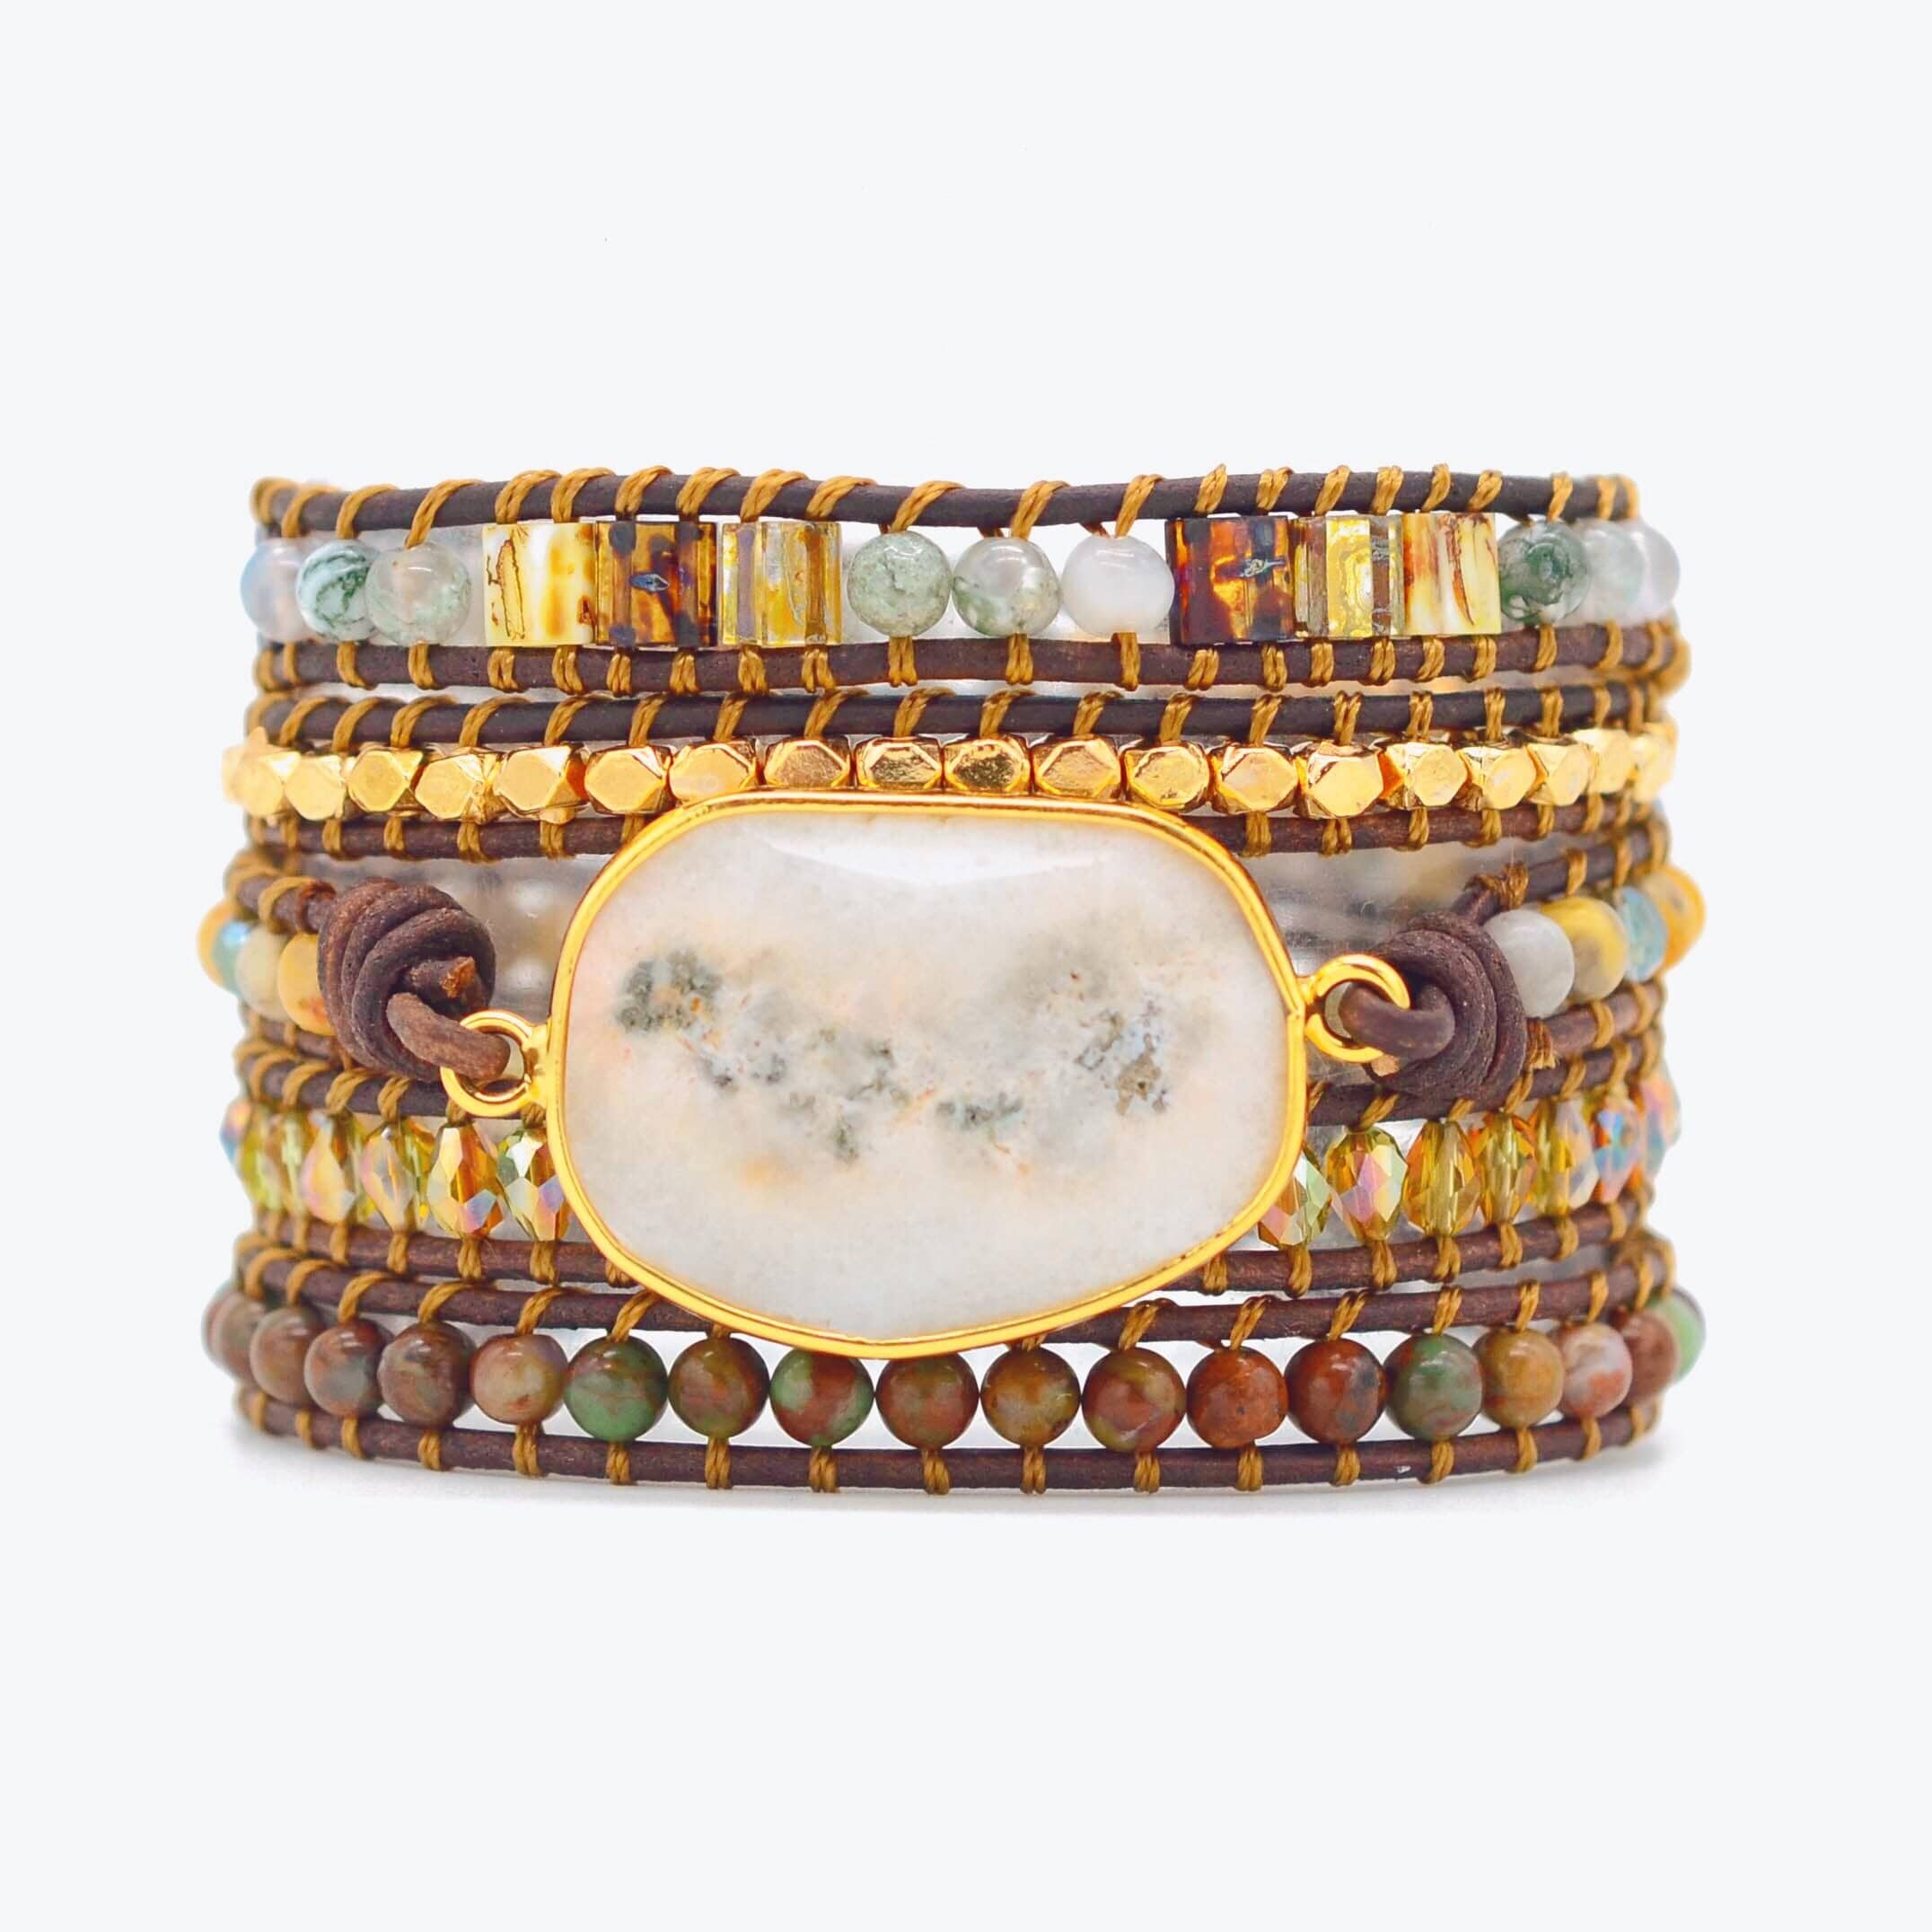 Atlantis Bracelet in Gold, Silver and Copper | Buy online jewelry at  MeriTomasa